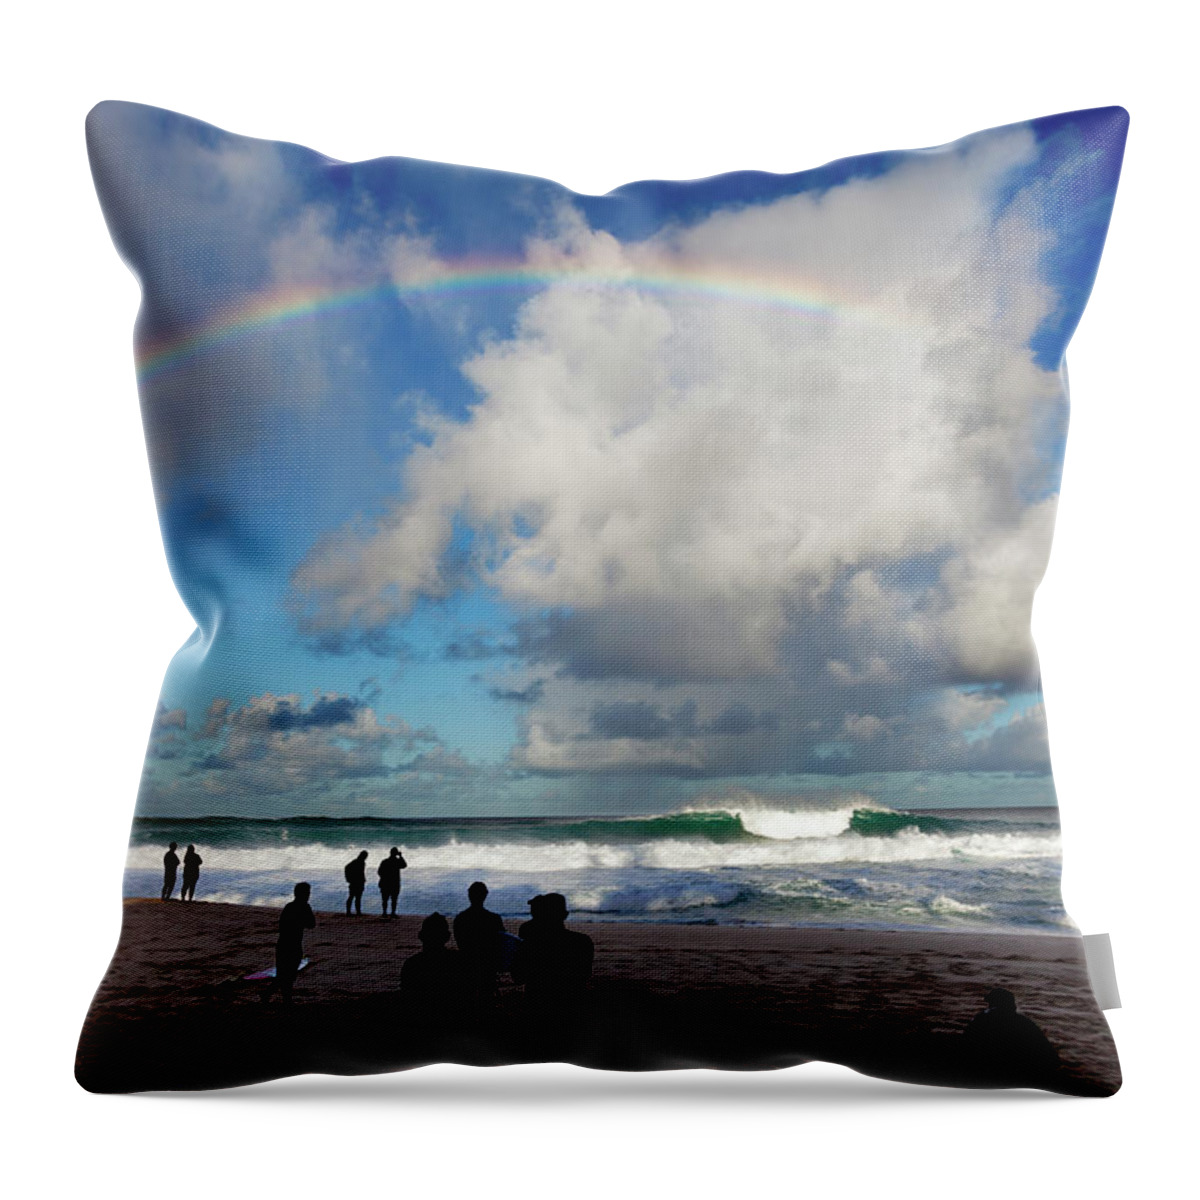 Rainbows Throw Pillow featuring the photograph Rainbow Silhouettes by Sean Davey